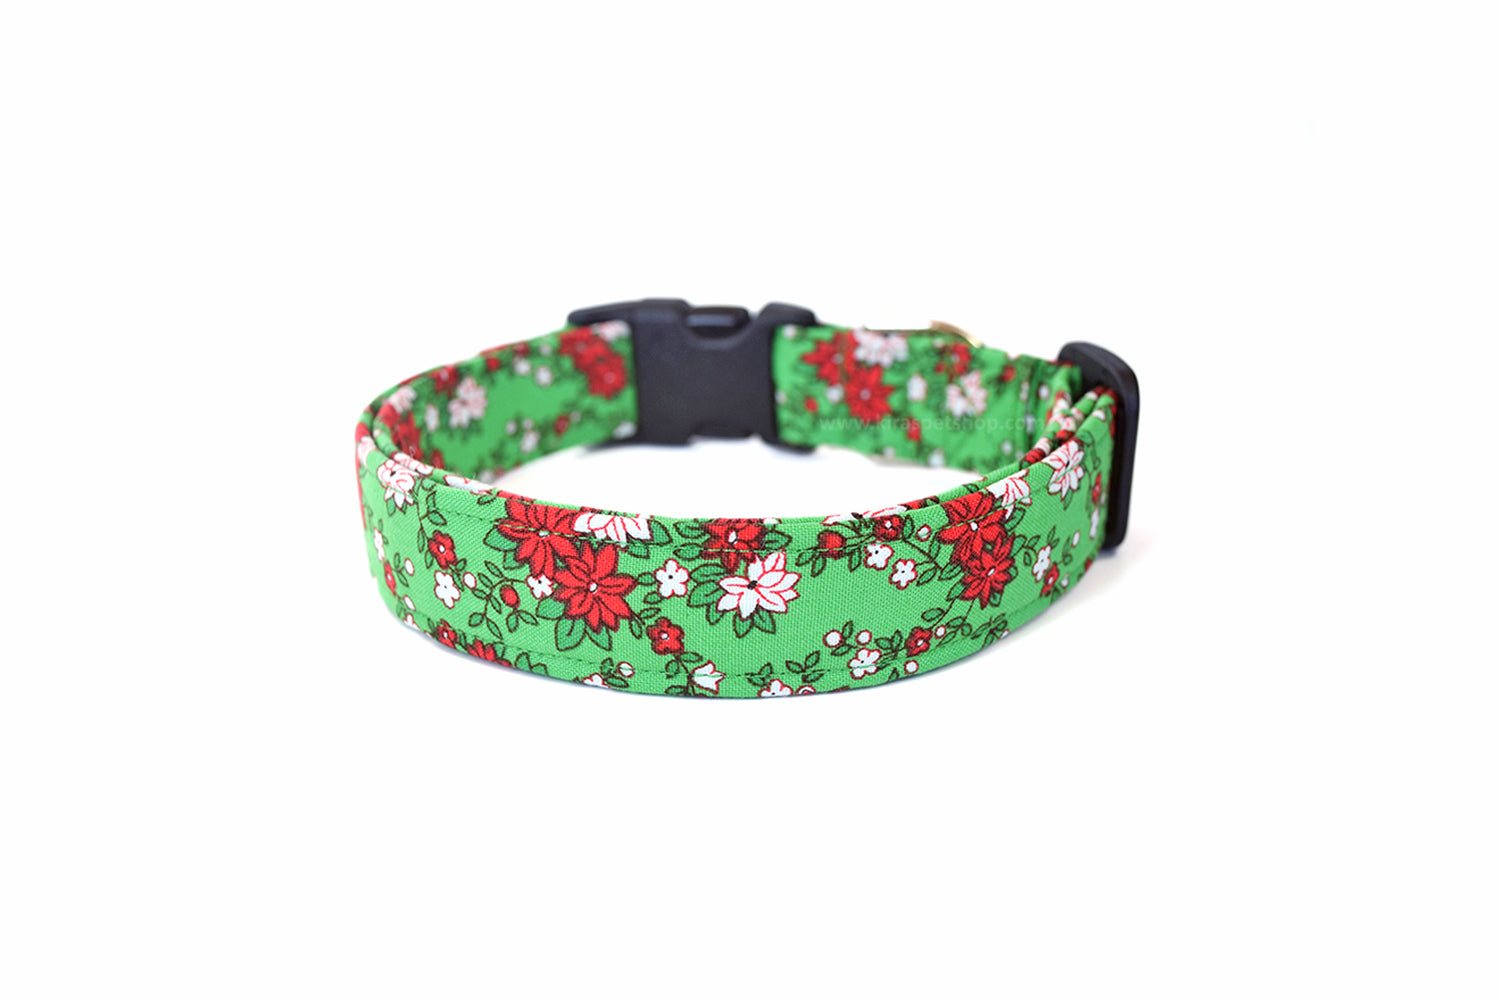 Green & Red Poinsettia Christmas Dog Collar - Handmade by Kira's Pet Shop